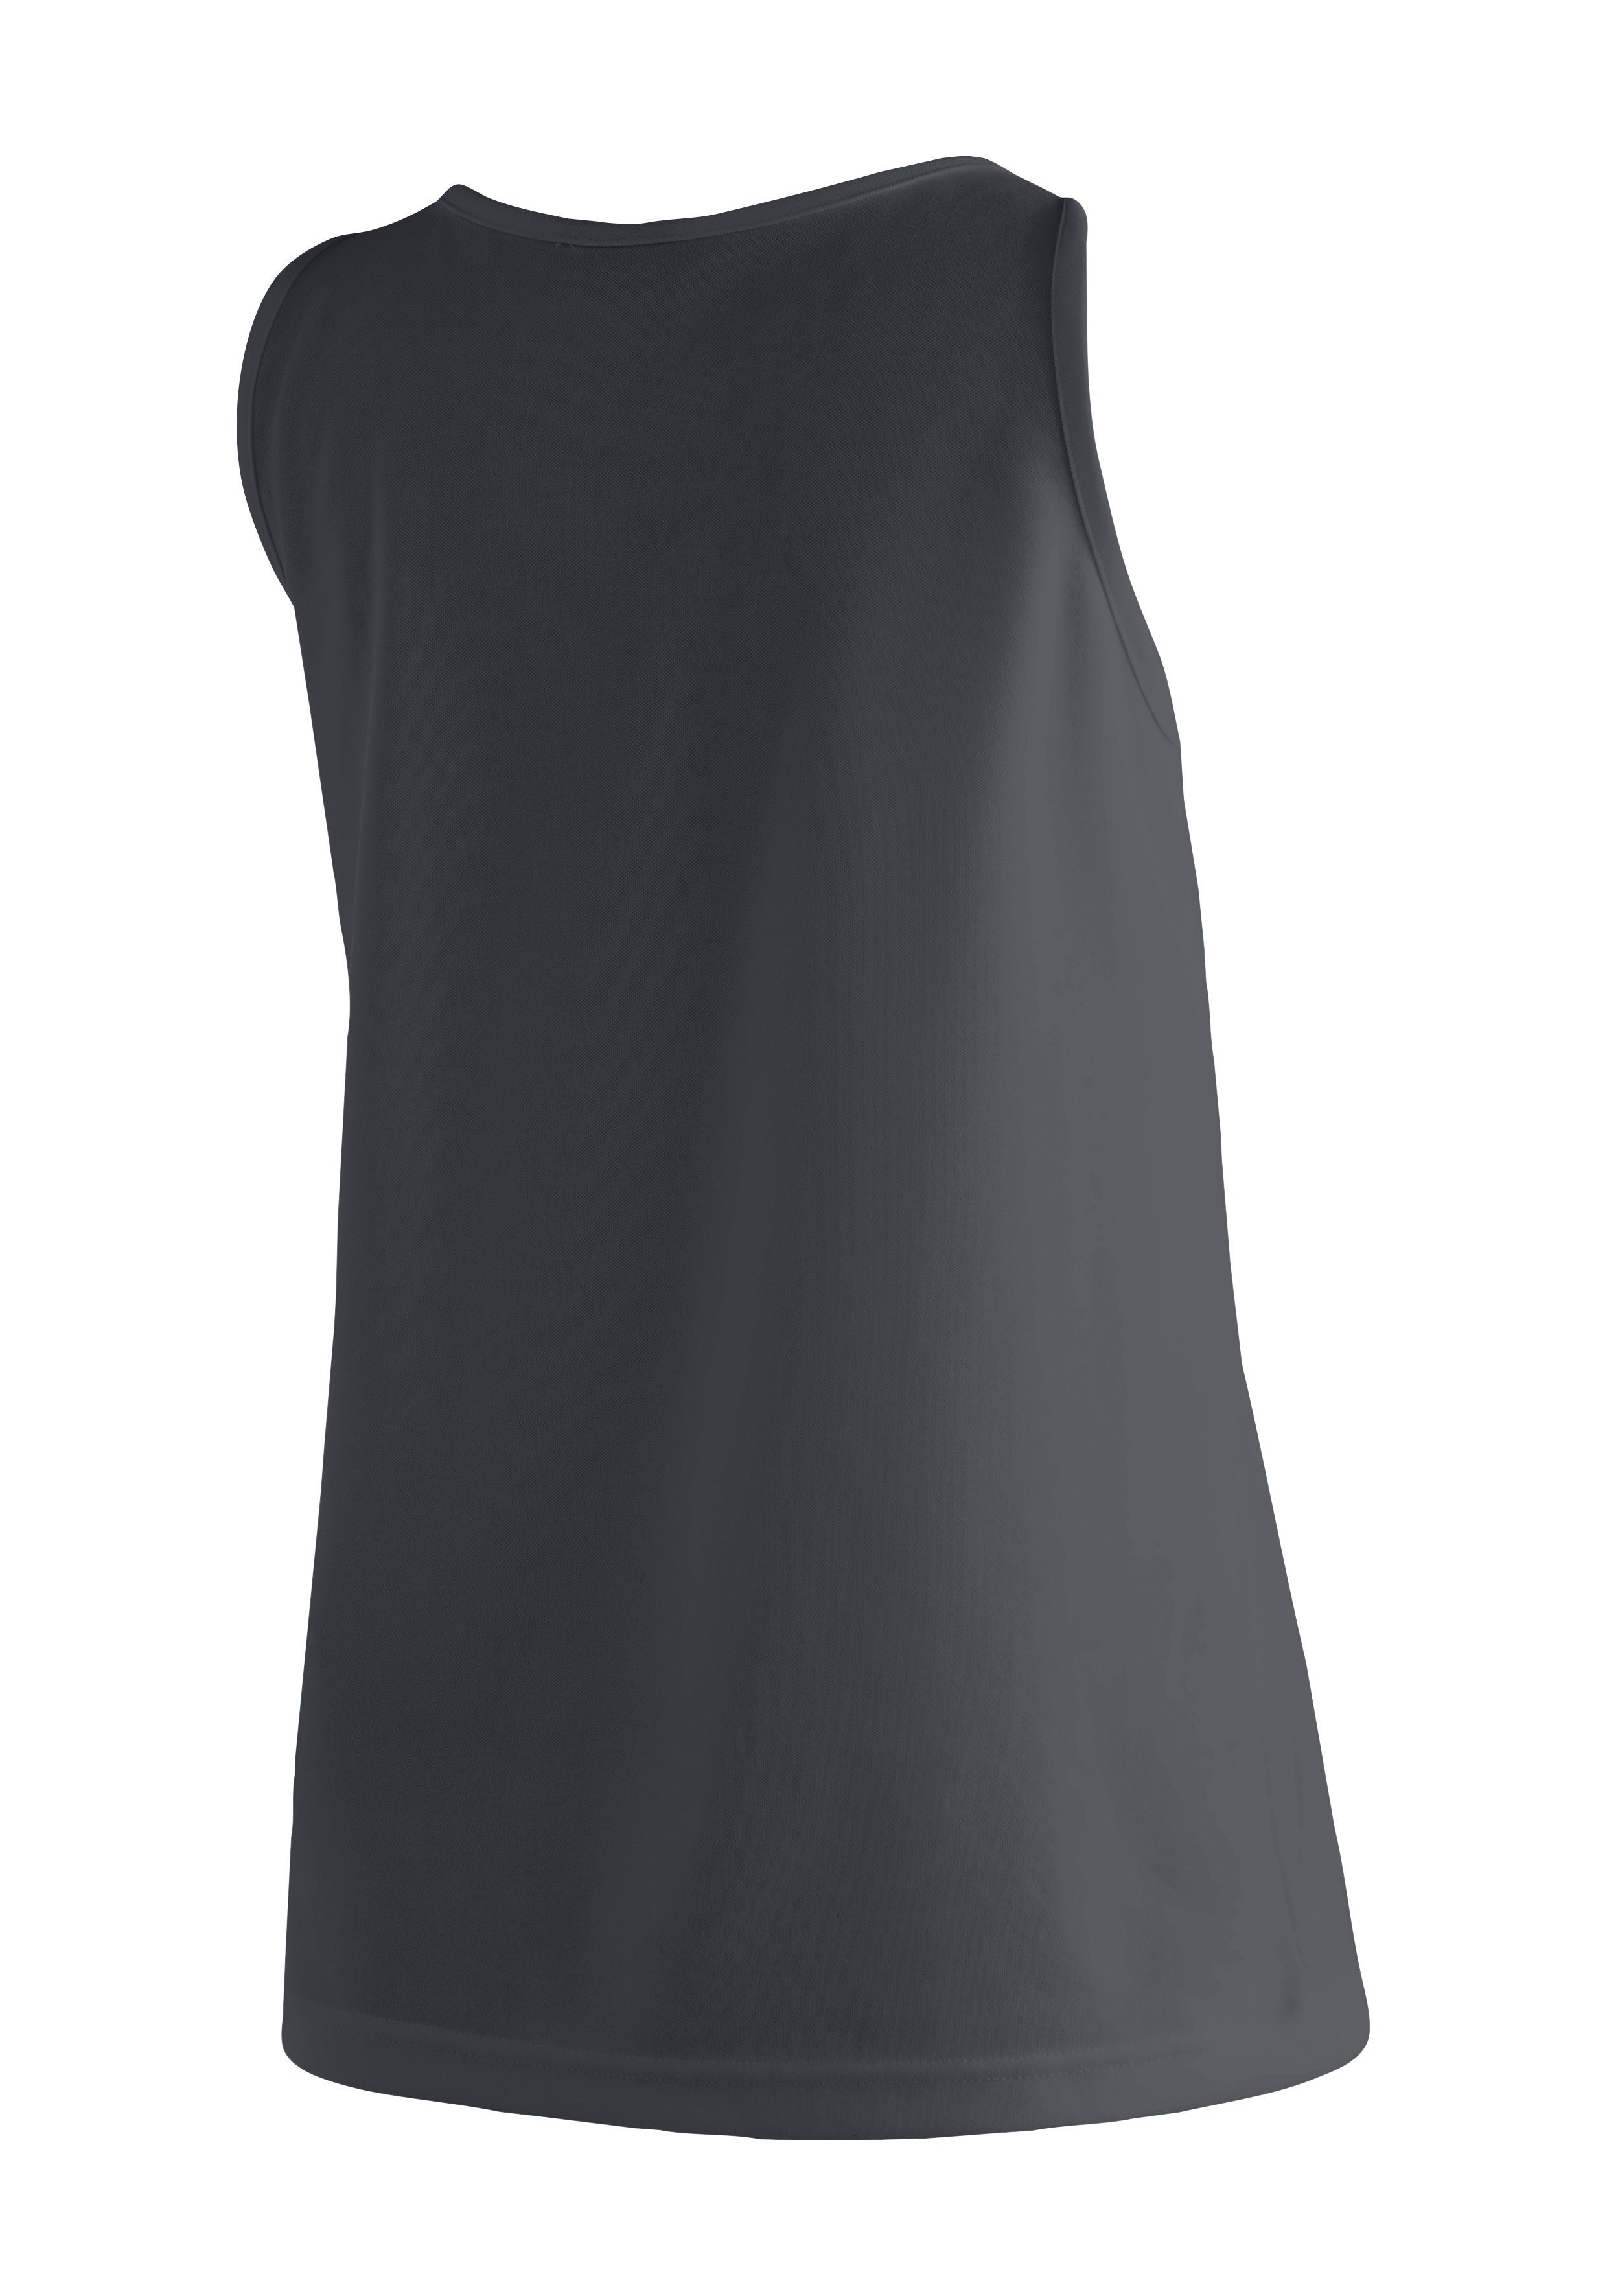 Damen Outdoor-Aktivitäten, Sports Petra Sport ärmelloses Tank-Top Maier Funktionsshirt für Shirt und schwarz